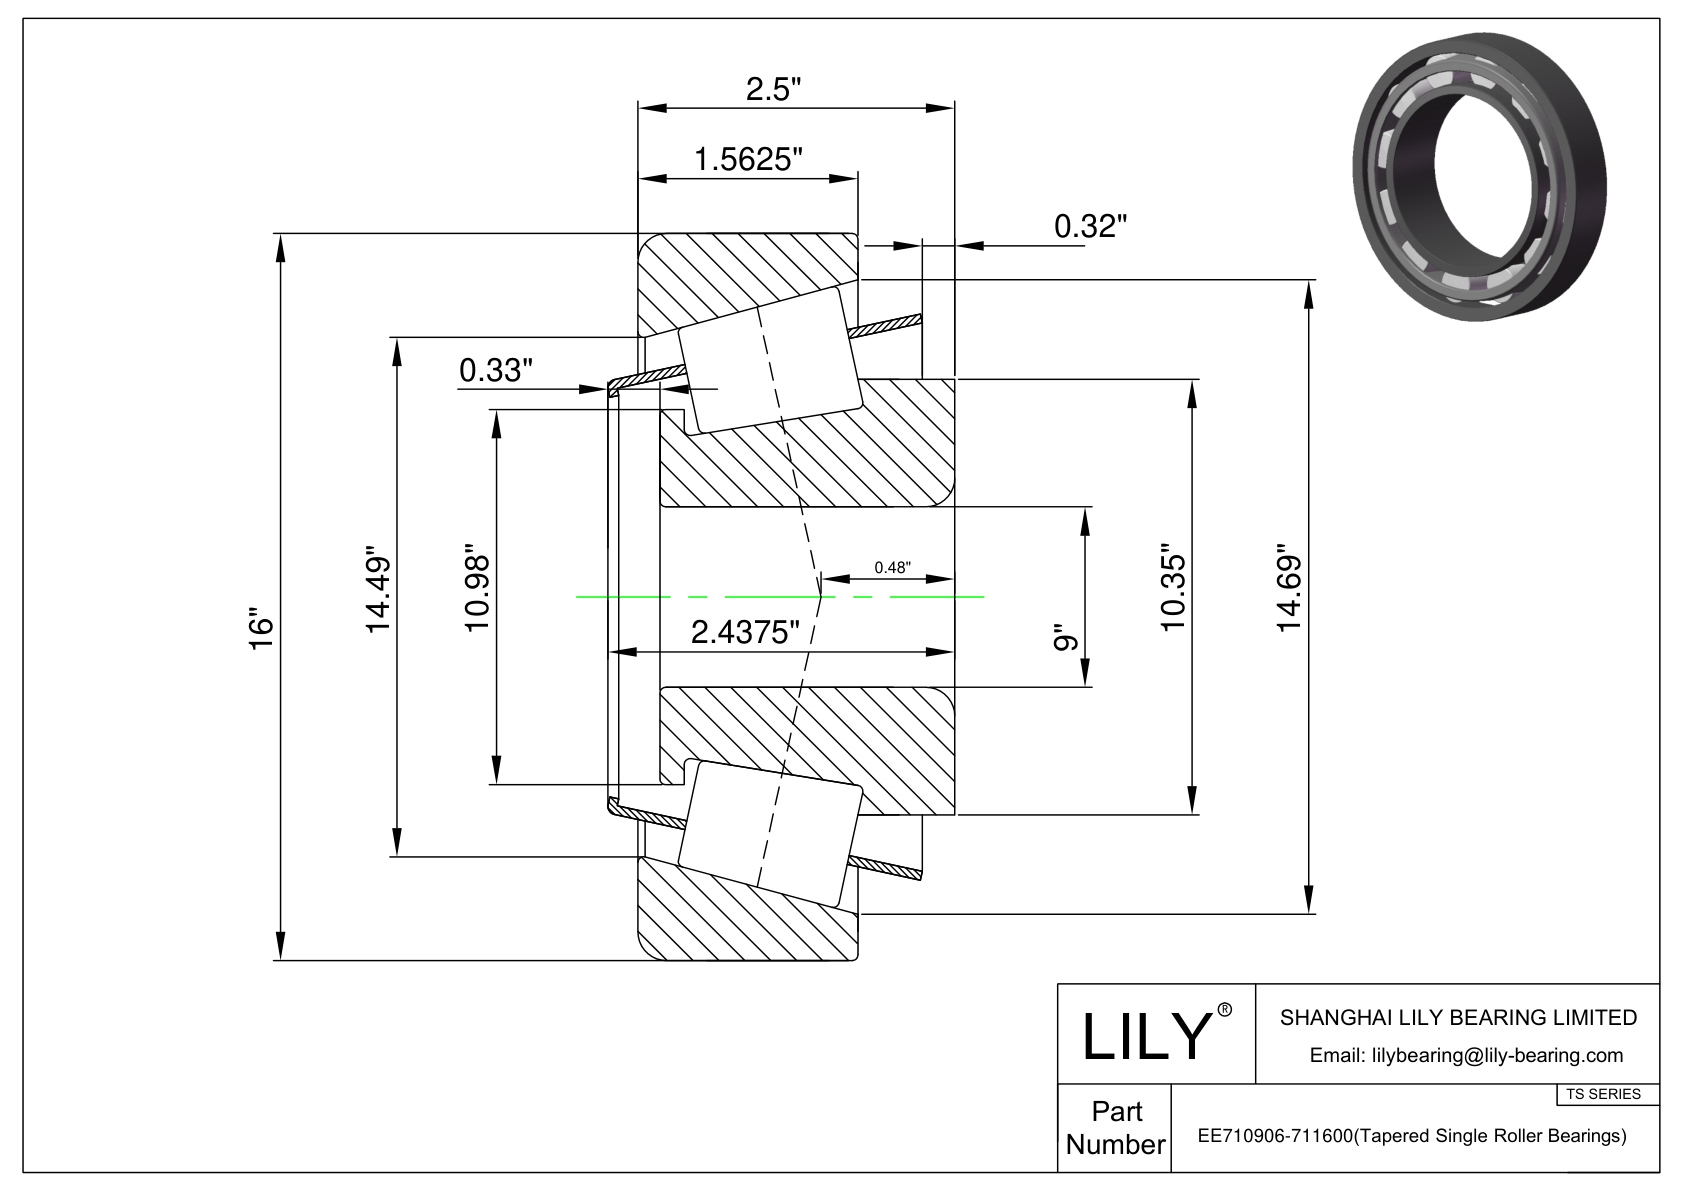 EE710906-711600 TS系列(圆锥单滚子轴承)(英制) CAD图形